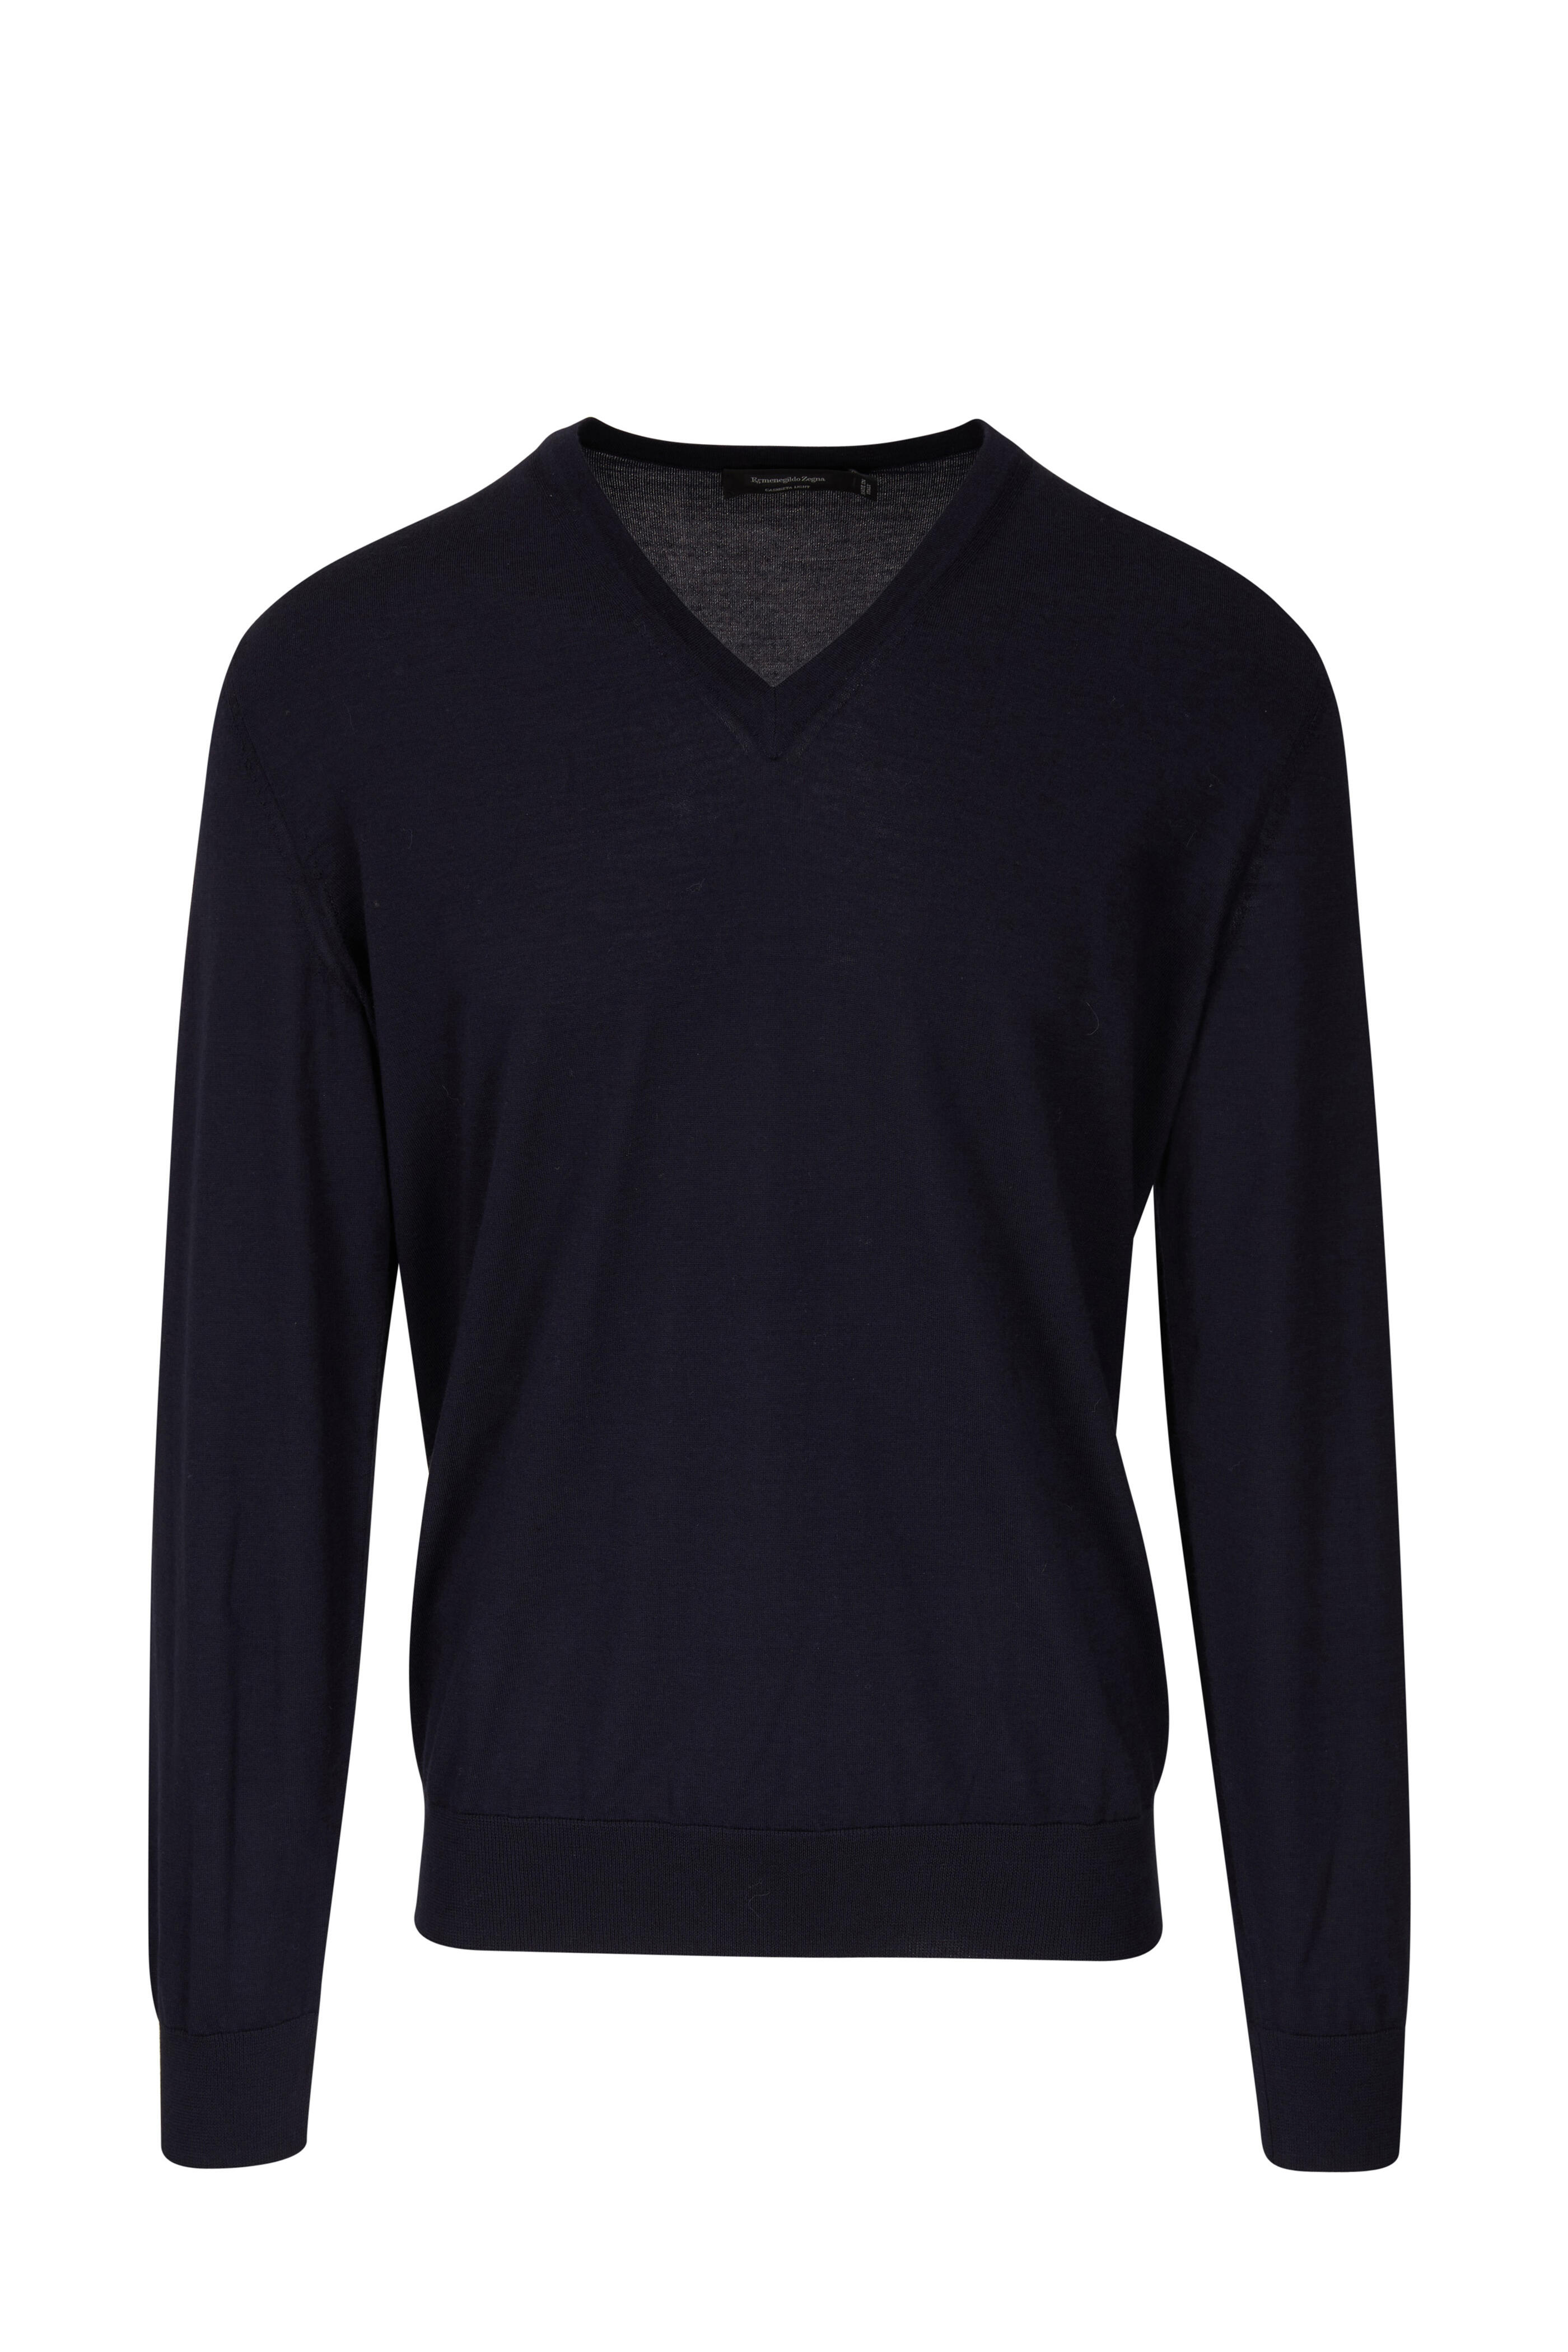 Zegna - Navy Cashmere & Silk V-Neck Pullover | Mitchell Stores